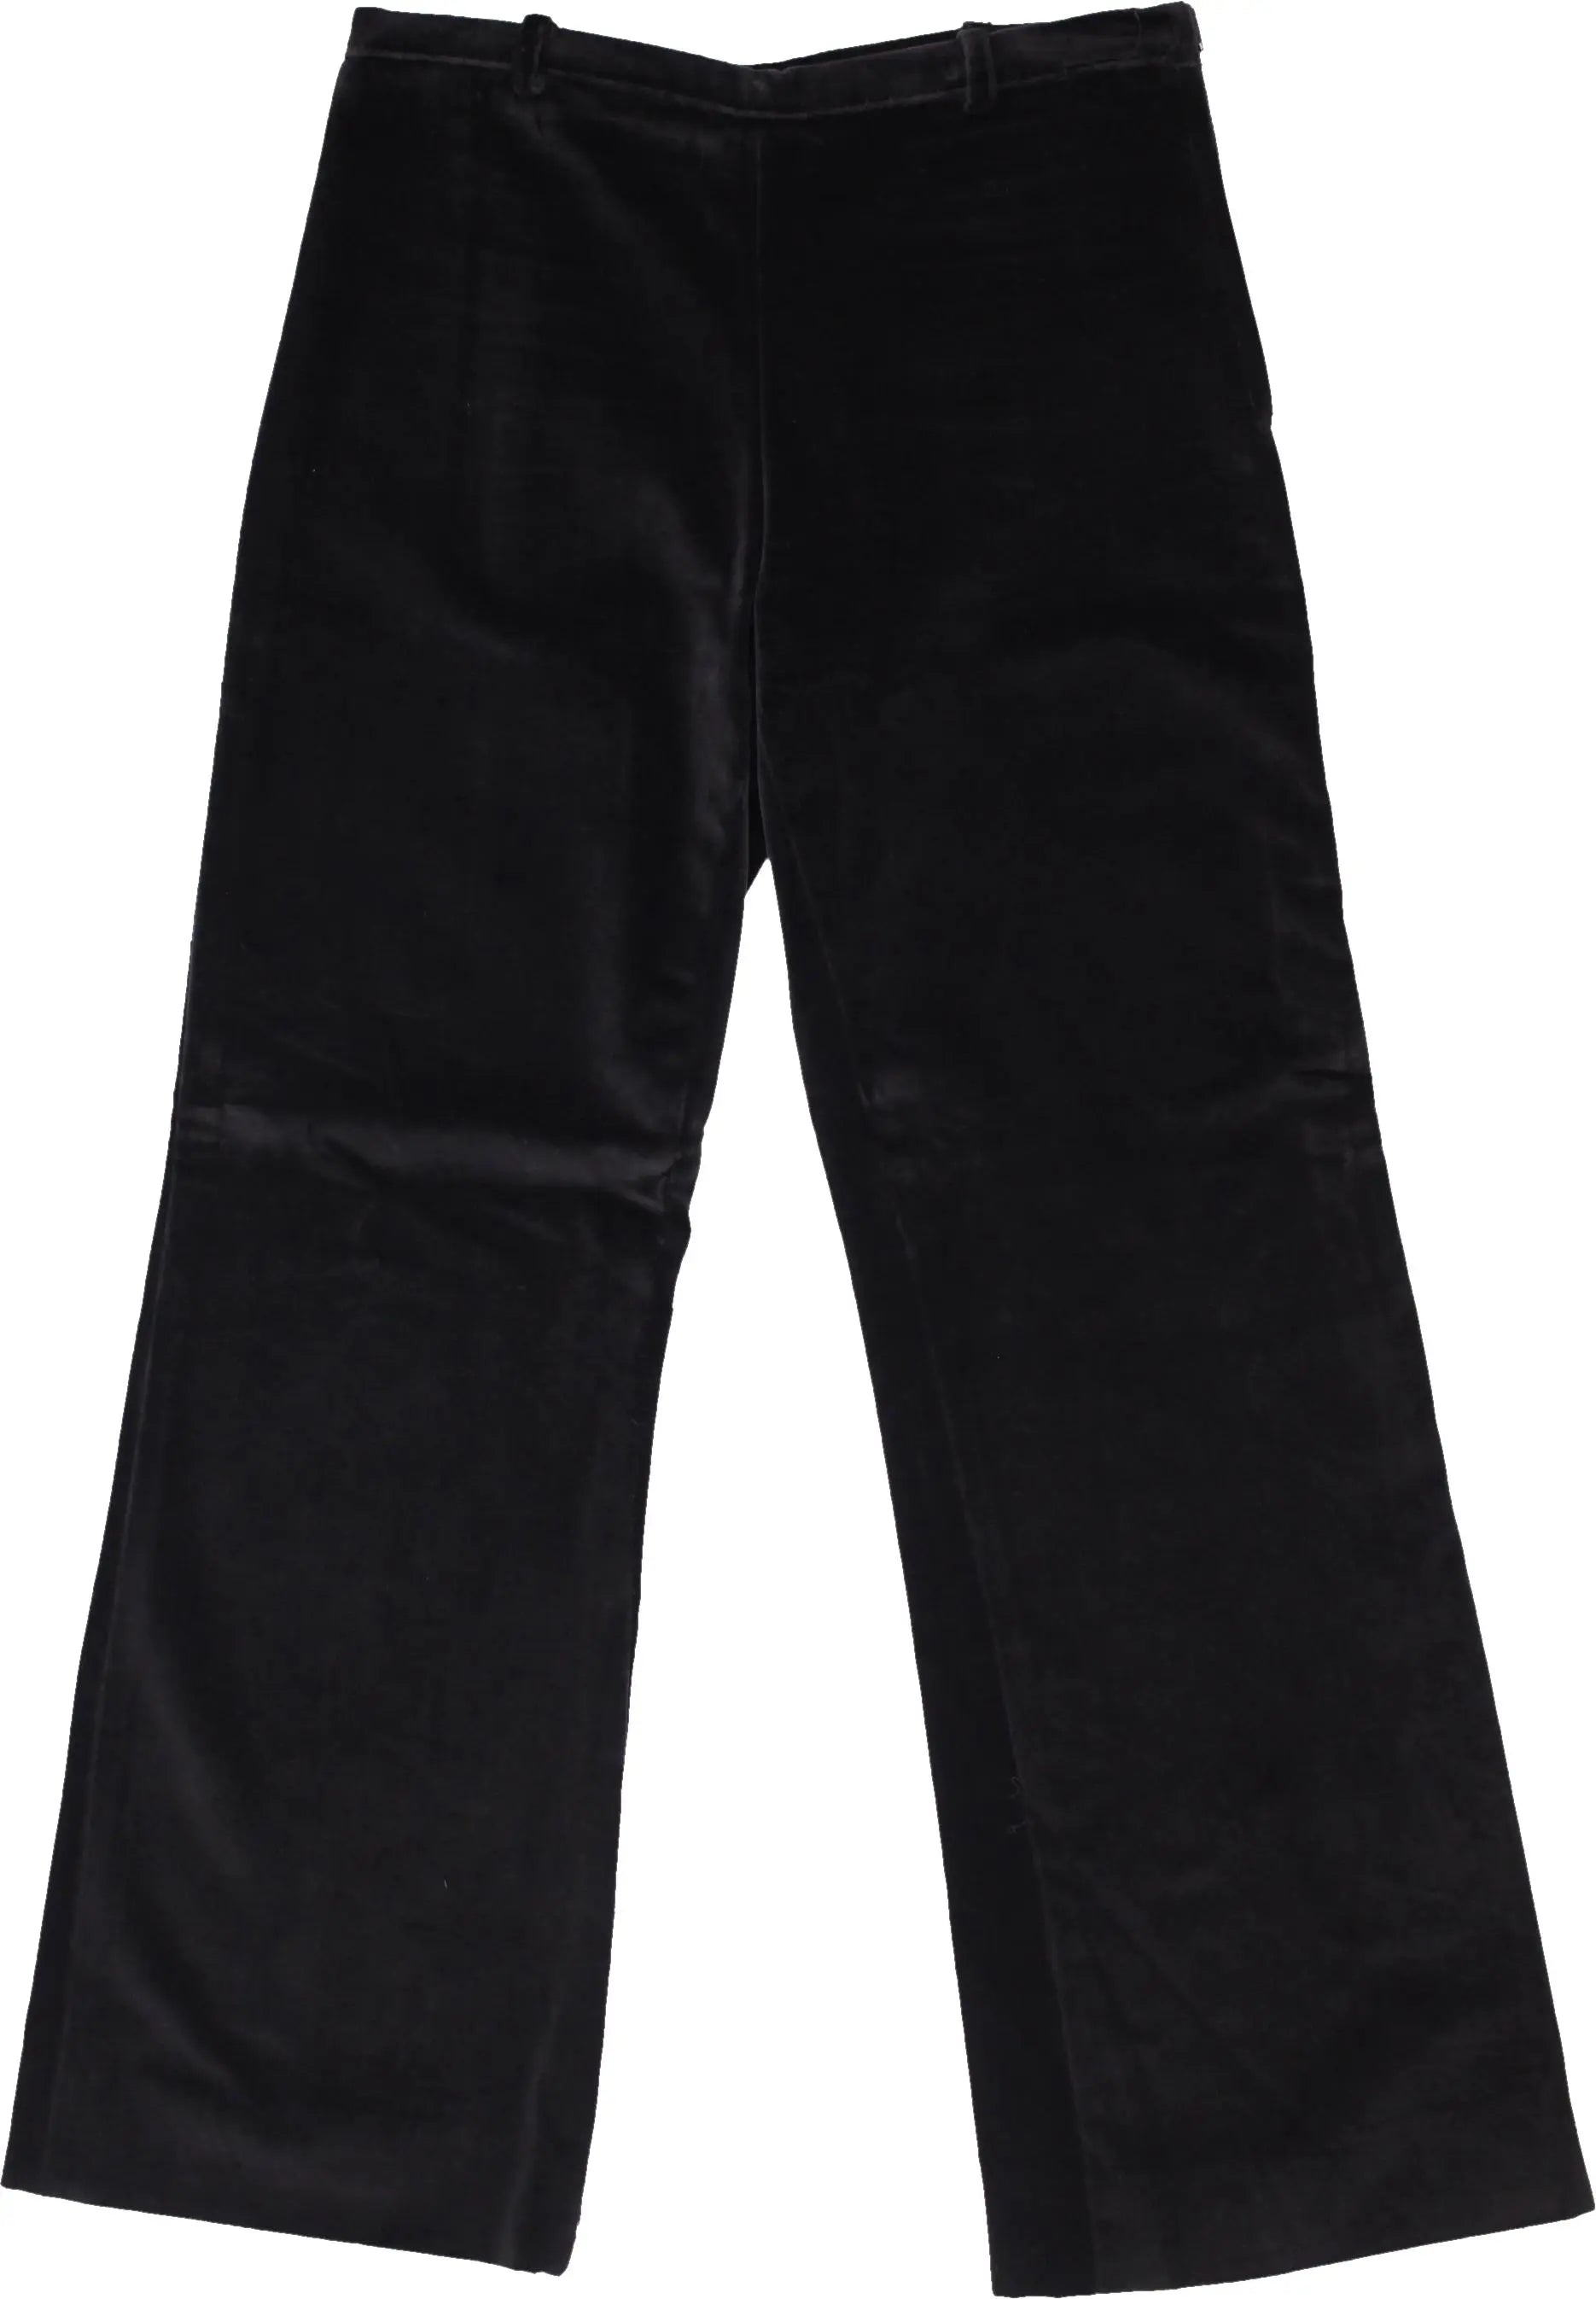 Handmade - Black Velvet Pants- ThriftTale.com - Vintage and second handclothing